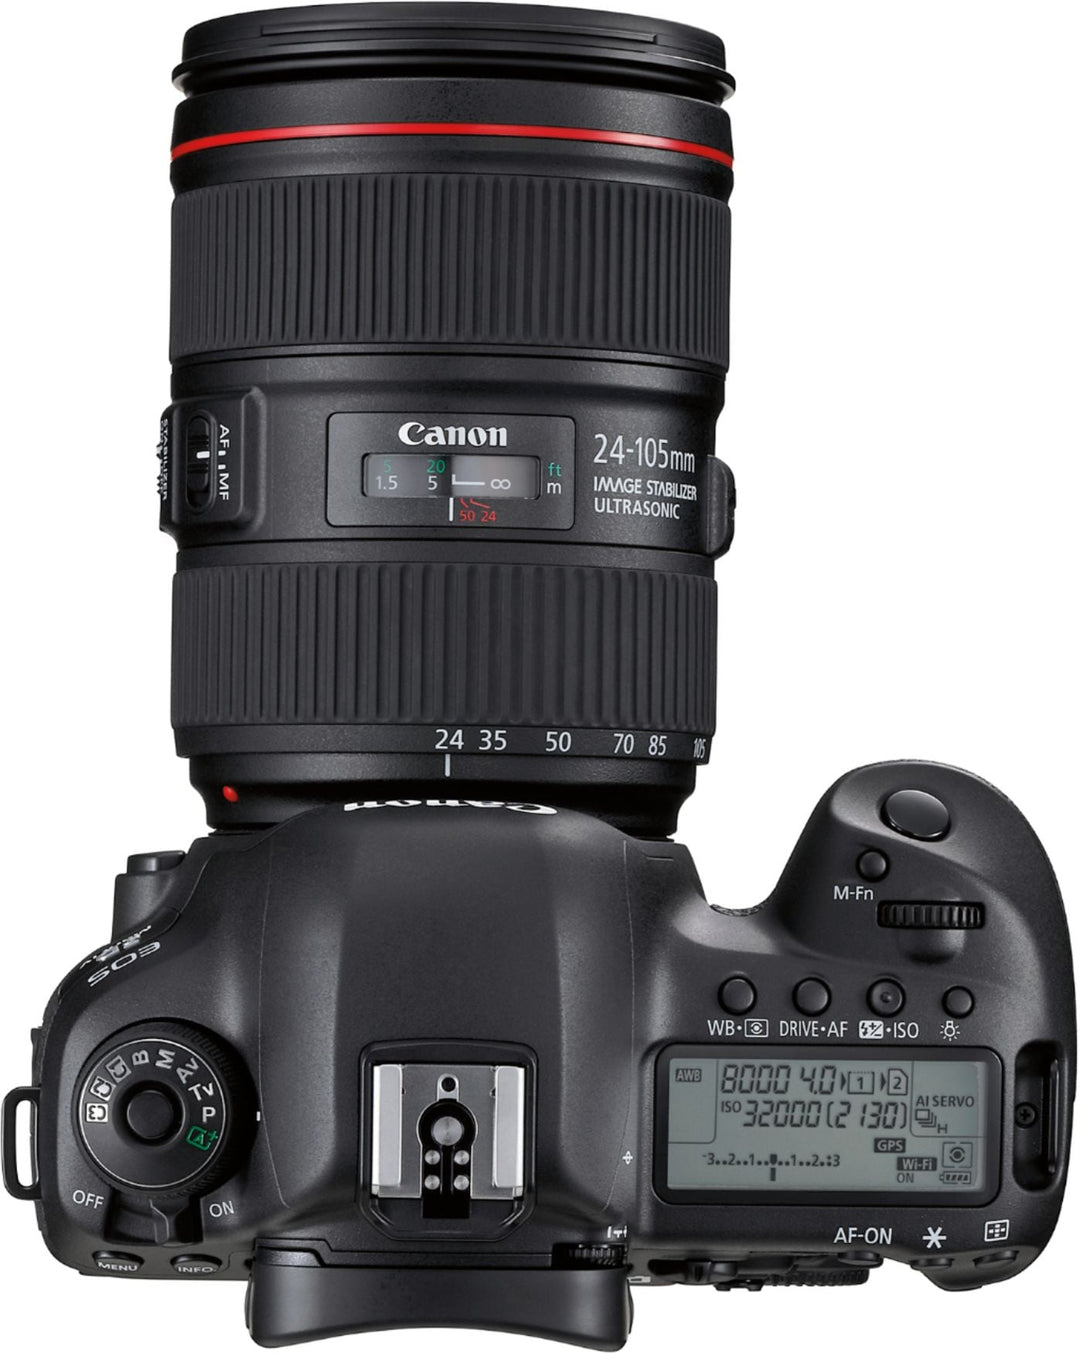 Canon - EOS 5D Mark IV DSLR Camera with 24-105mm f/4L IS II USM Lens - Black_3